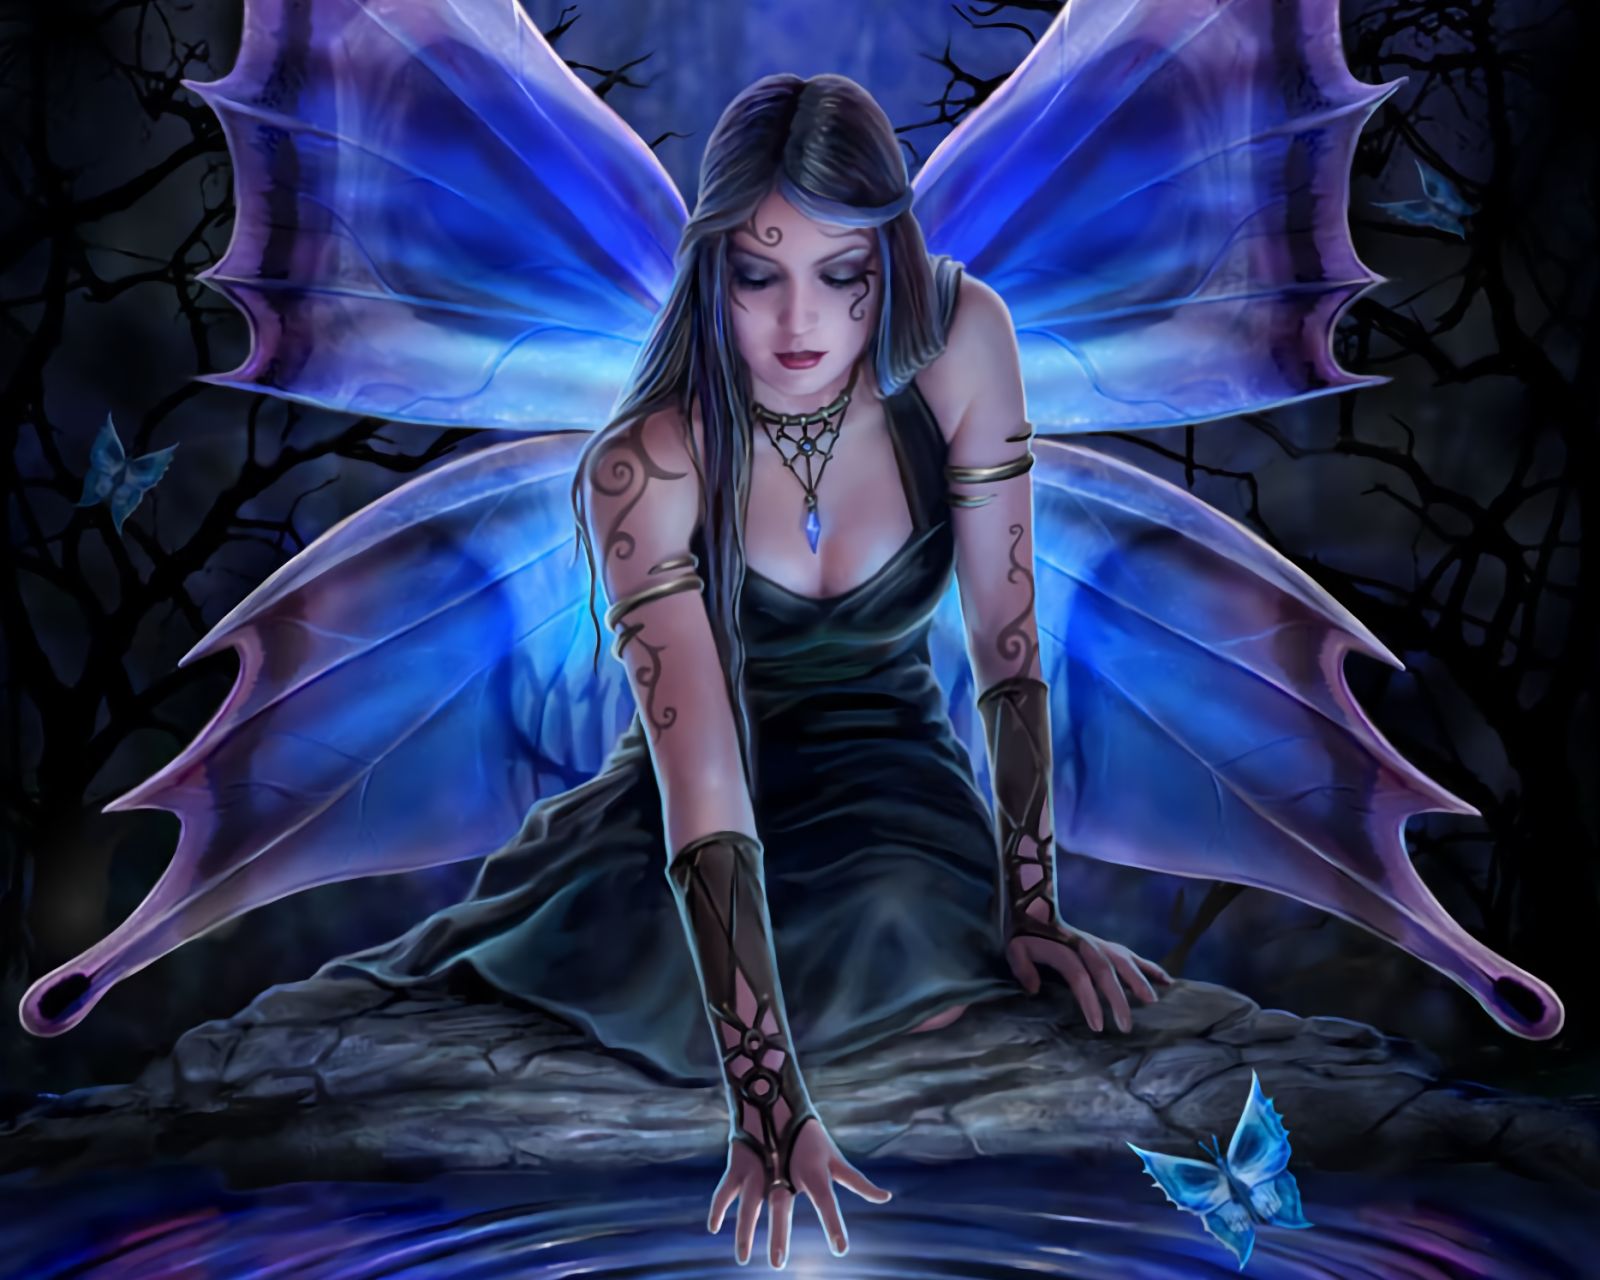 Gothic Fairy Tattoo Design free image download